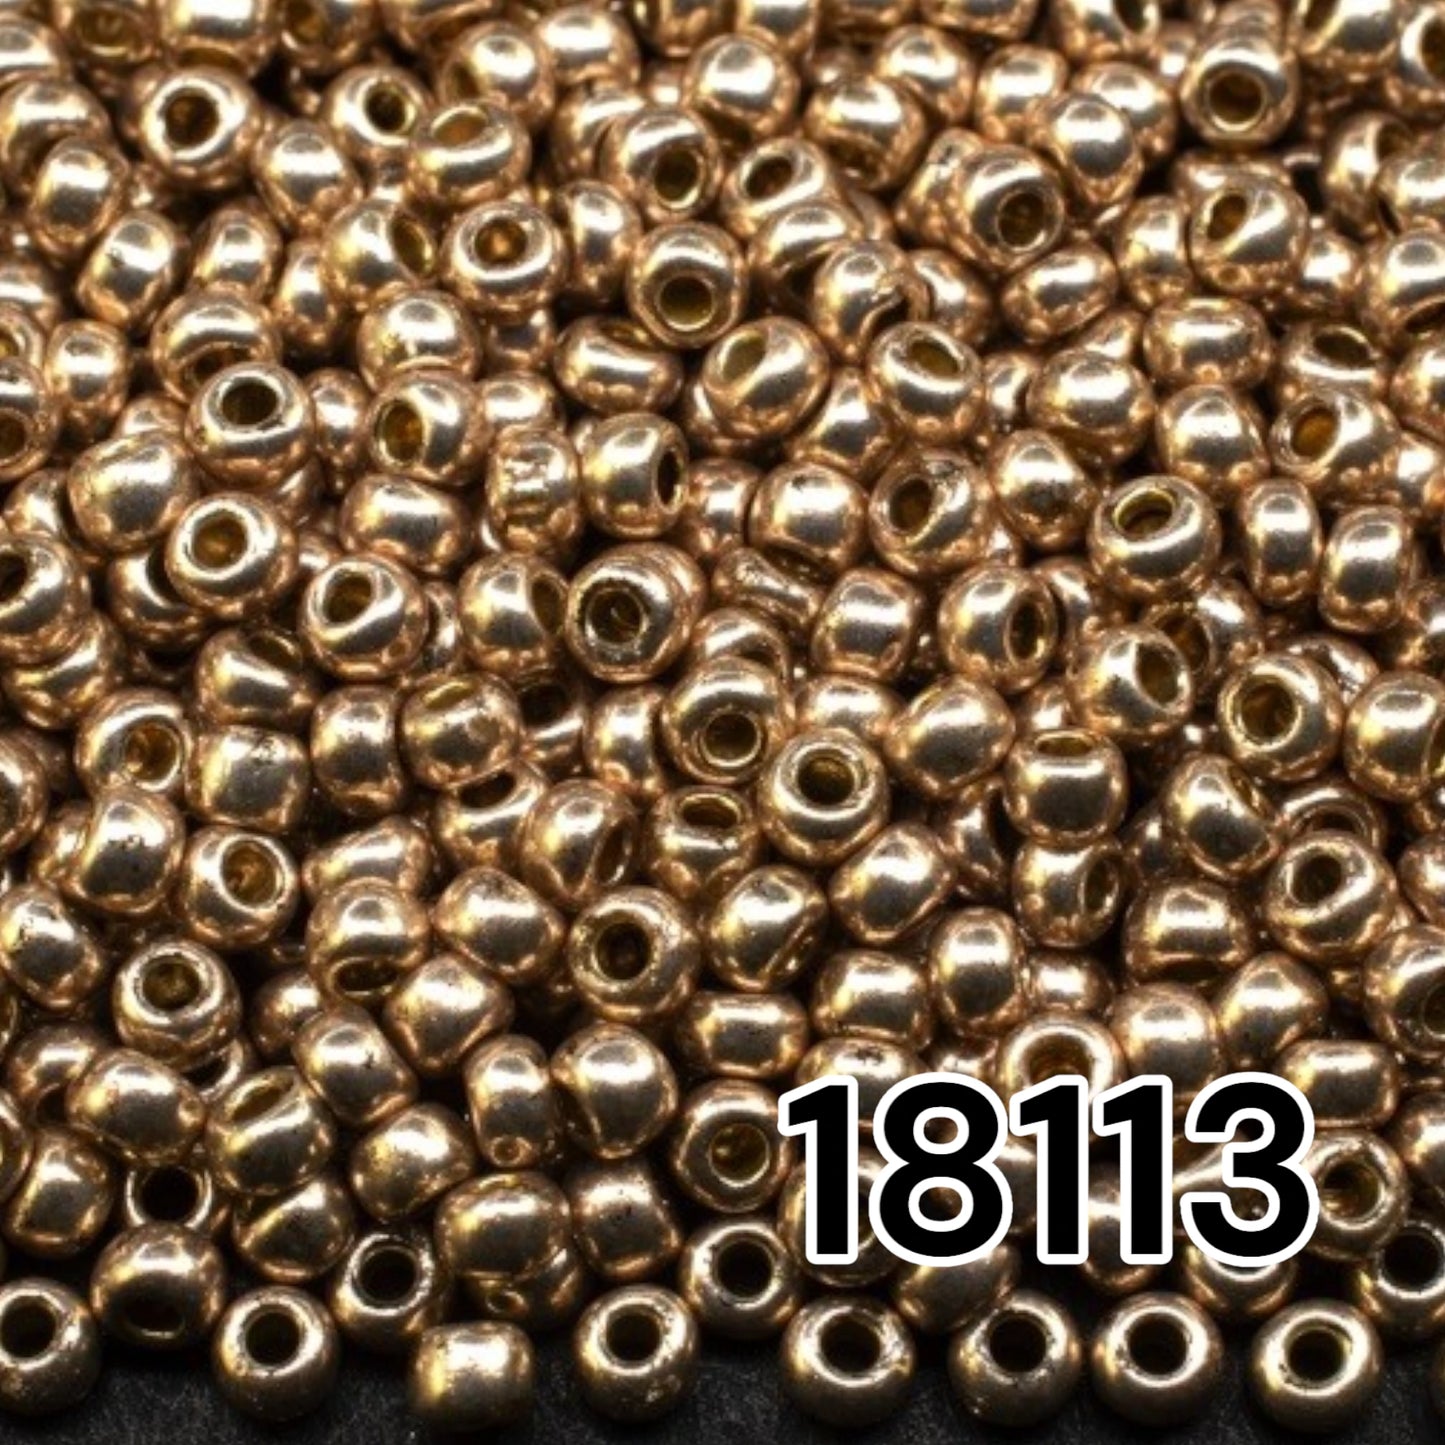 18113 Czech seed beads PRECIOSA round 10/0 Gold metallic. Metallic - Solgel.